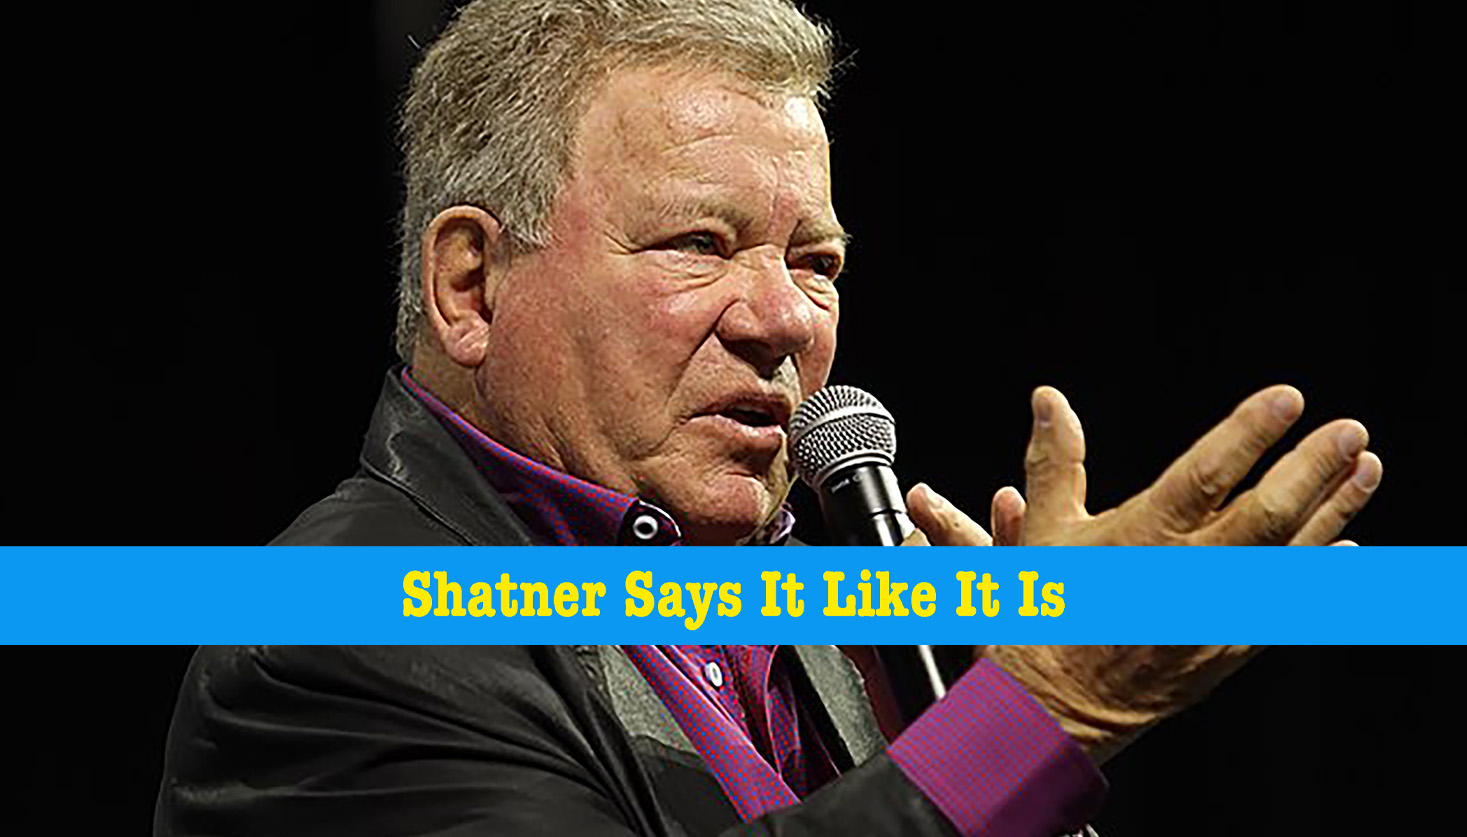 William Shatner Speaks the Truth